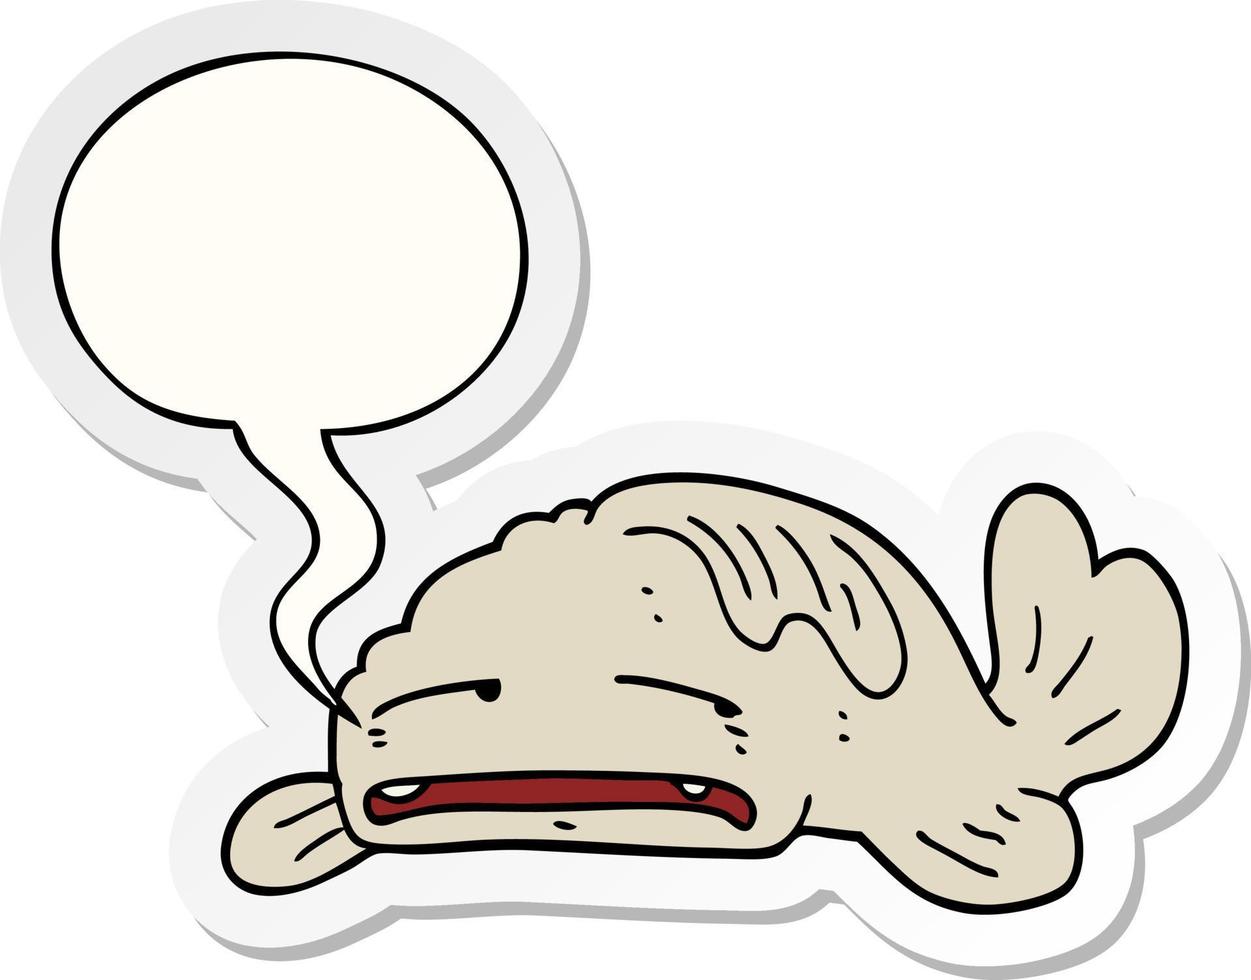 cartoon sad old fish and speech bubble sticker vector